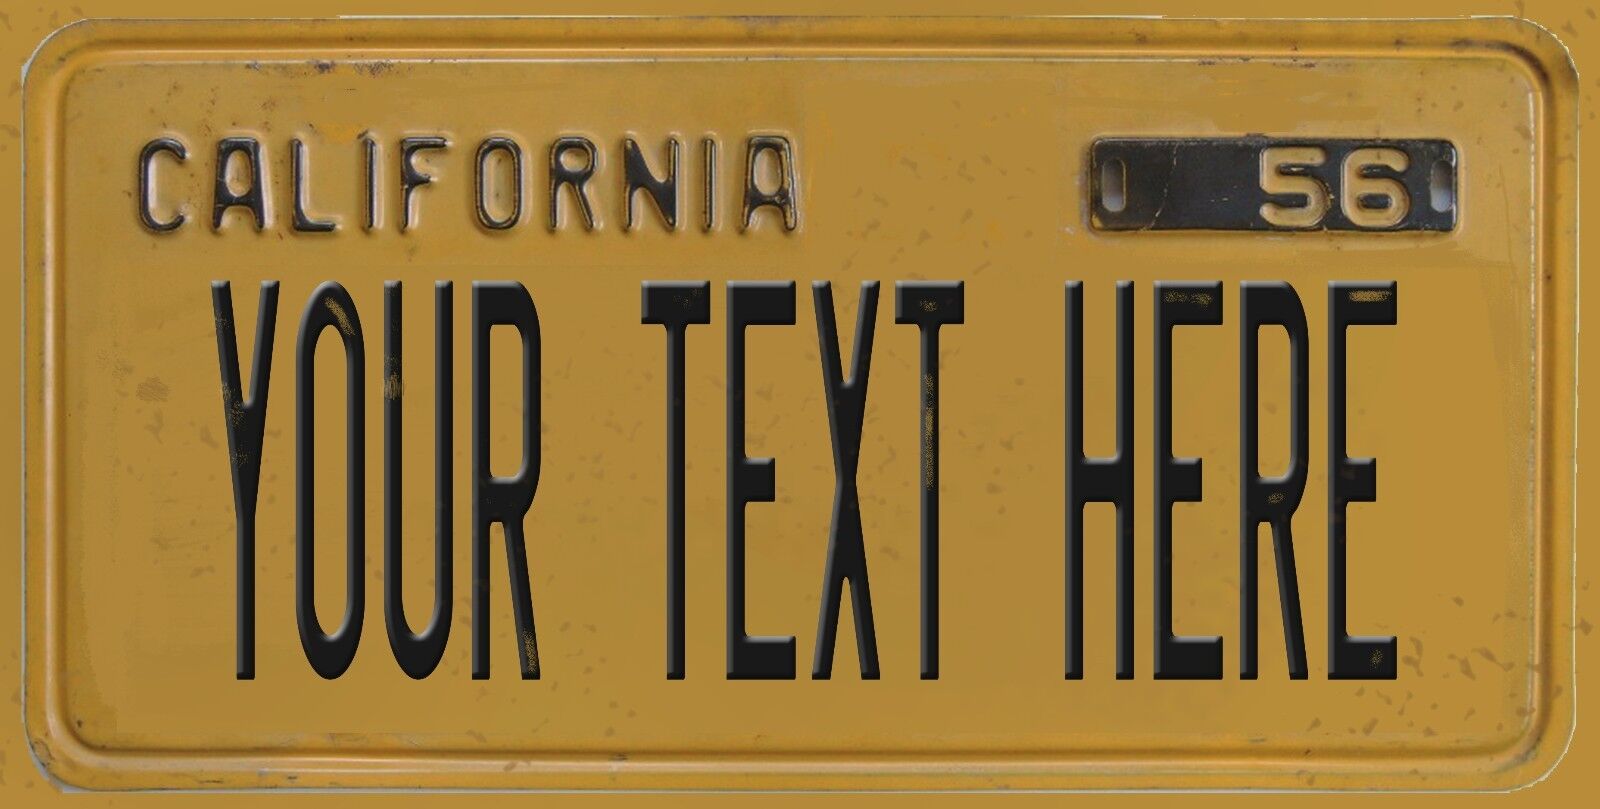 Custom Retro California License Plate Personalize You Pick text